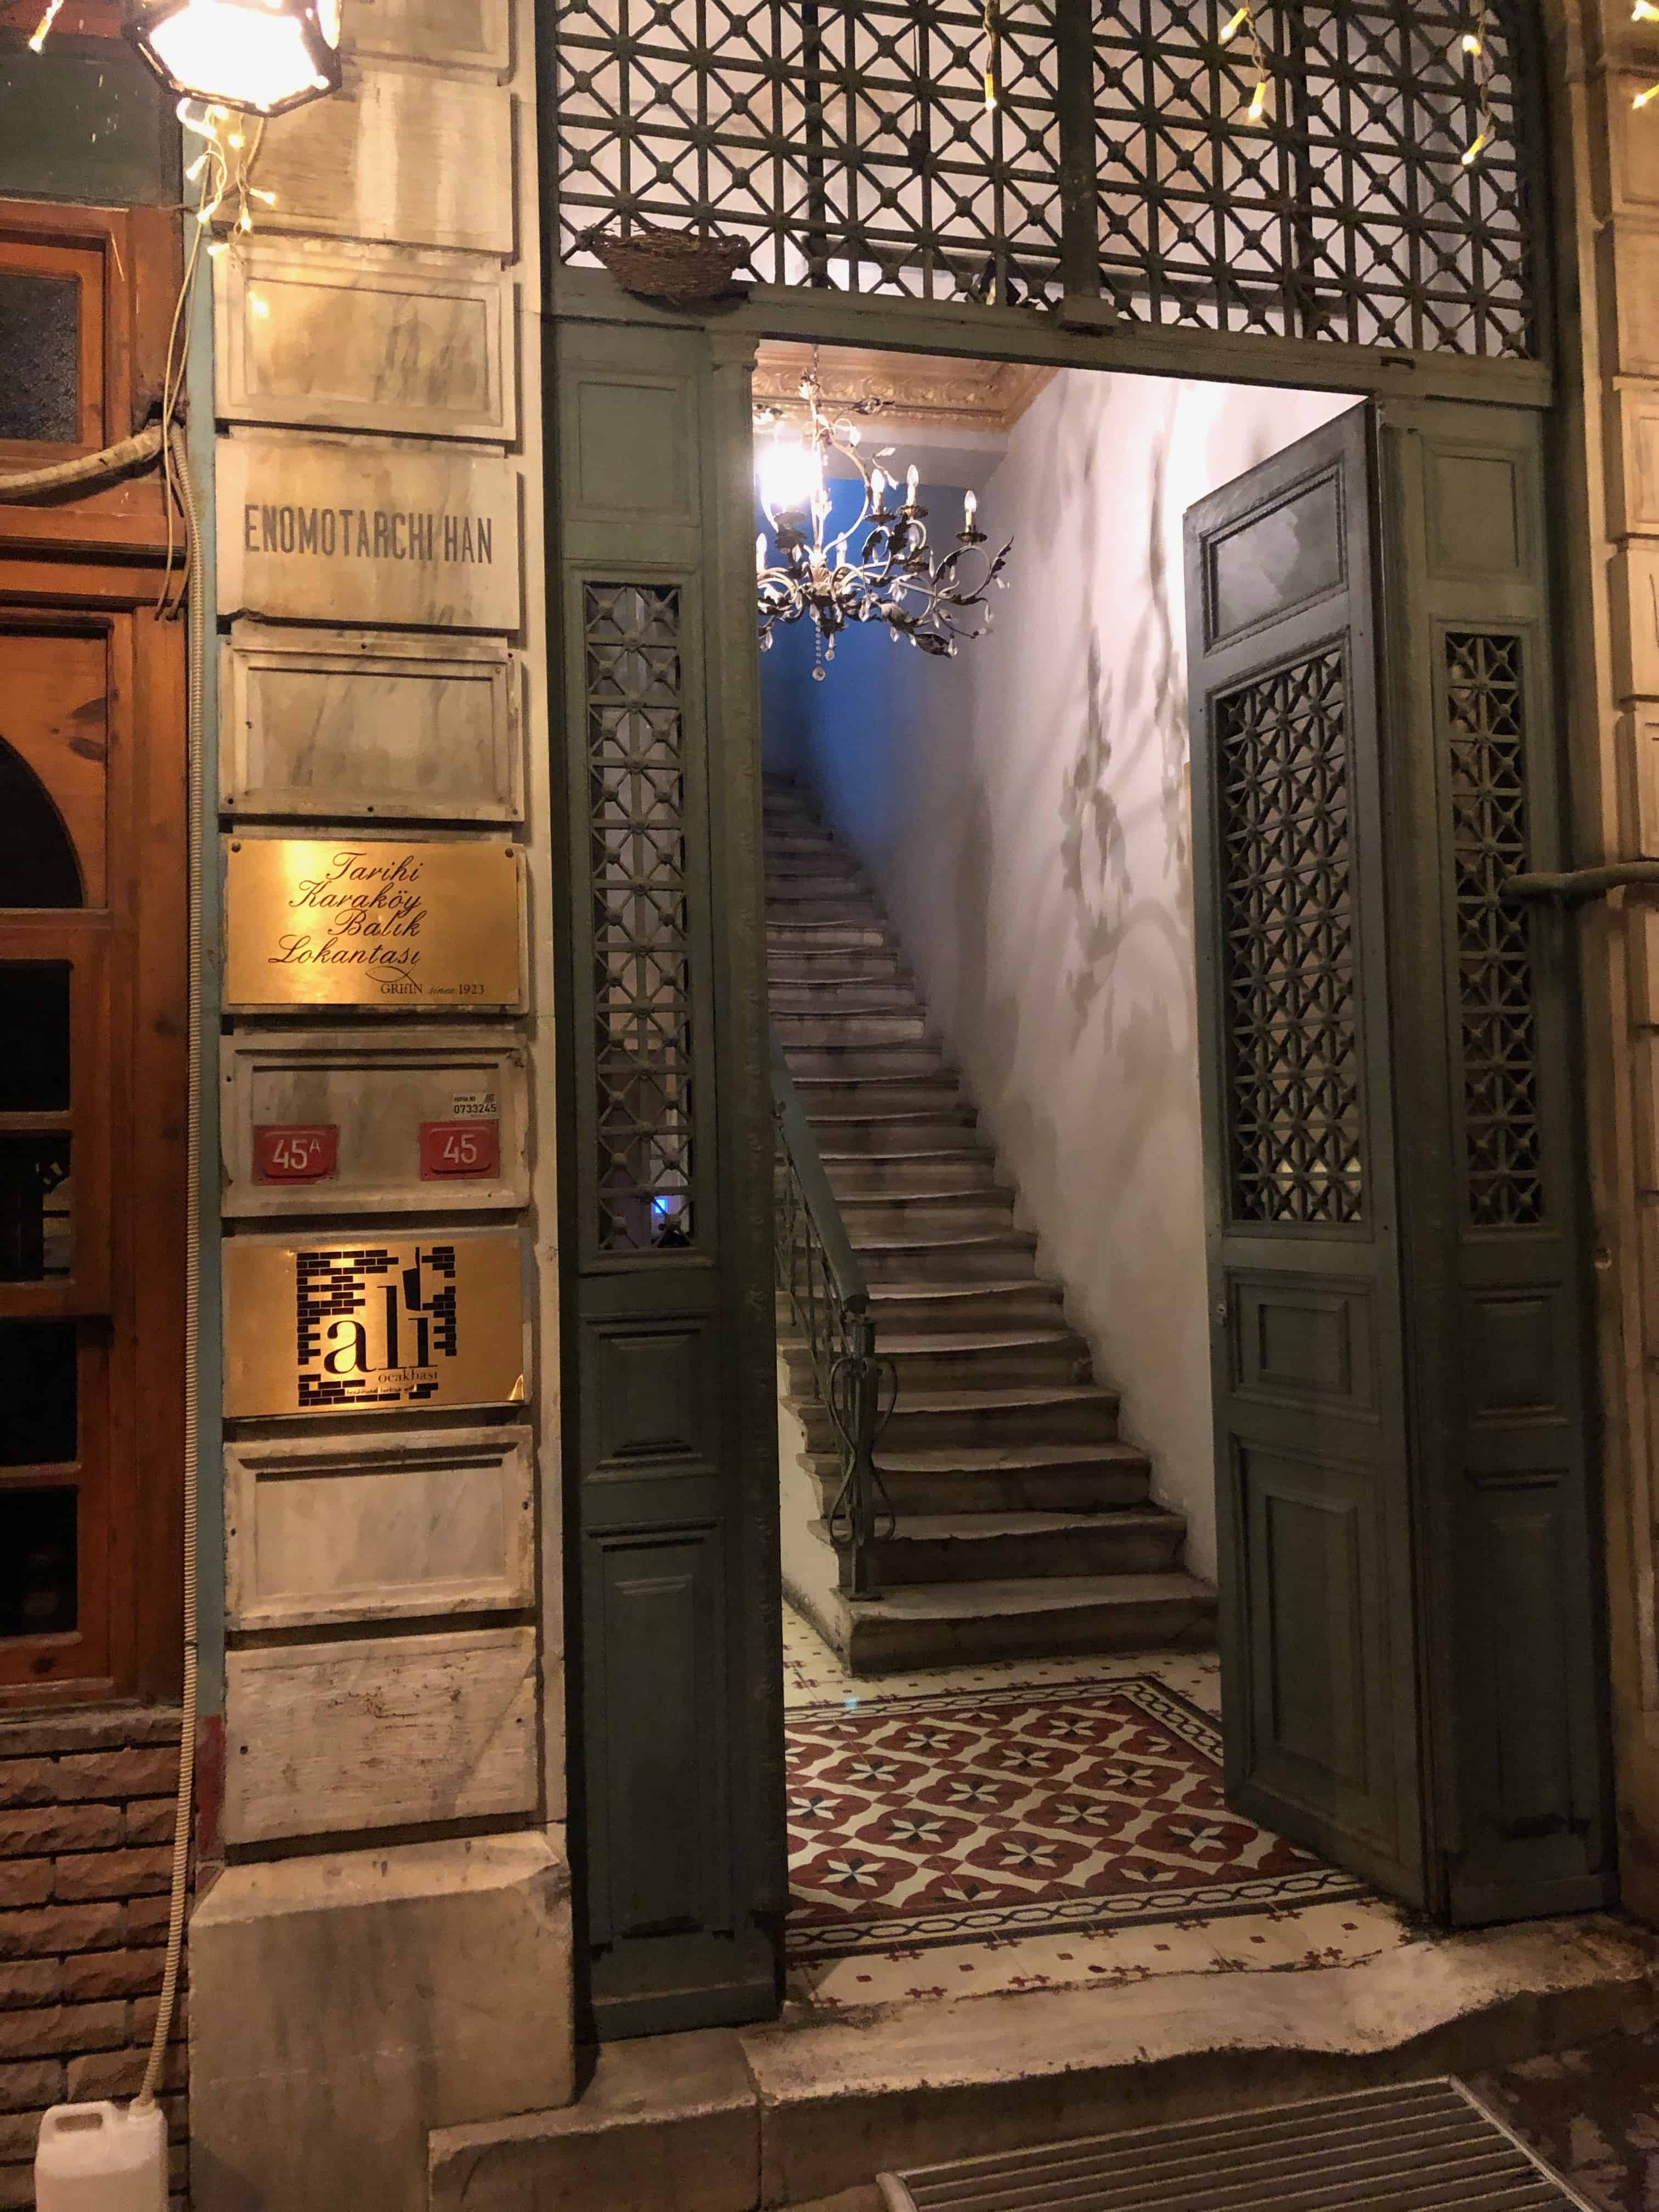 Entrance to the building to Ali Ocakbaşı in Karaköy, Istanbul, Turkey